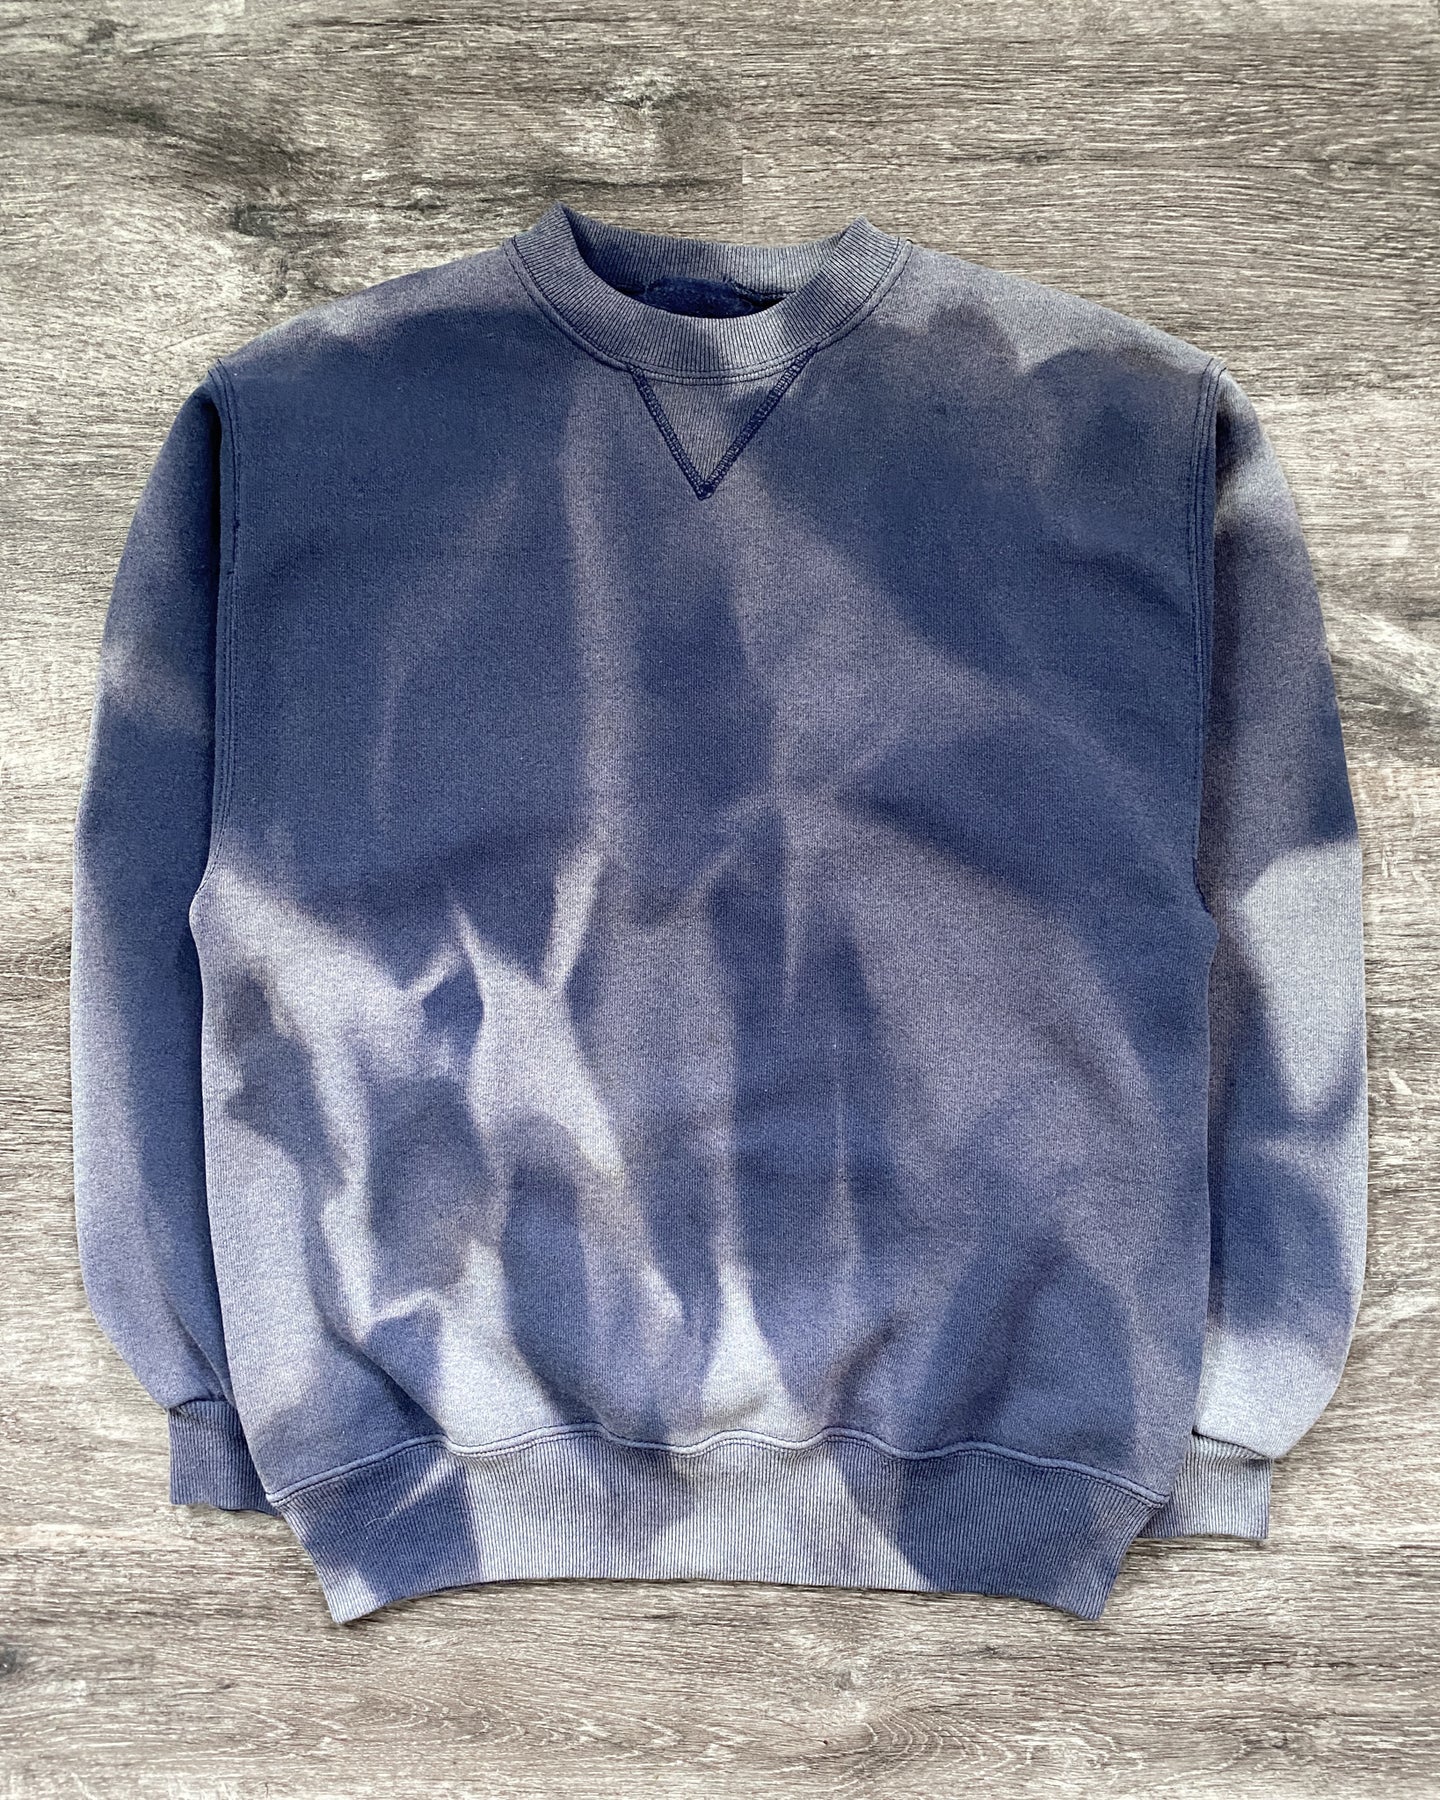 1990s Sun Faded Navy Crewneck Sweatshirt - Size Large